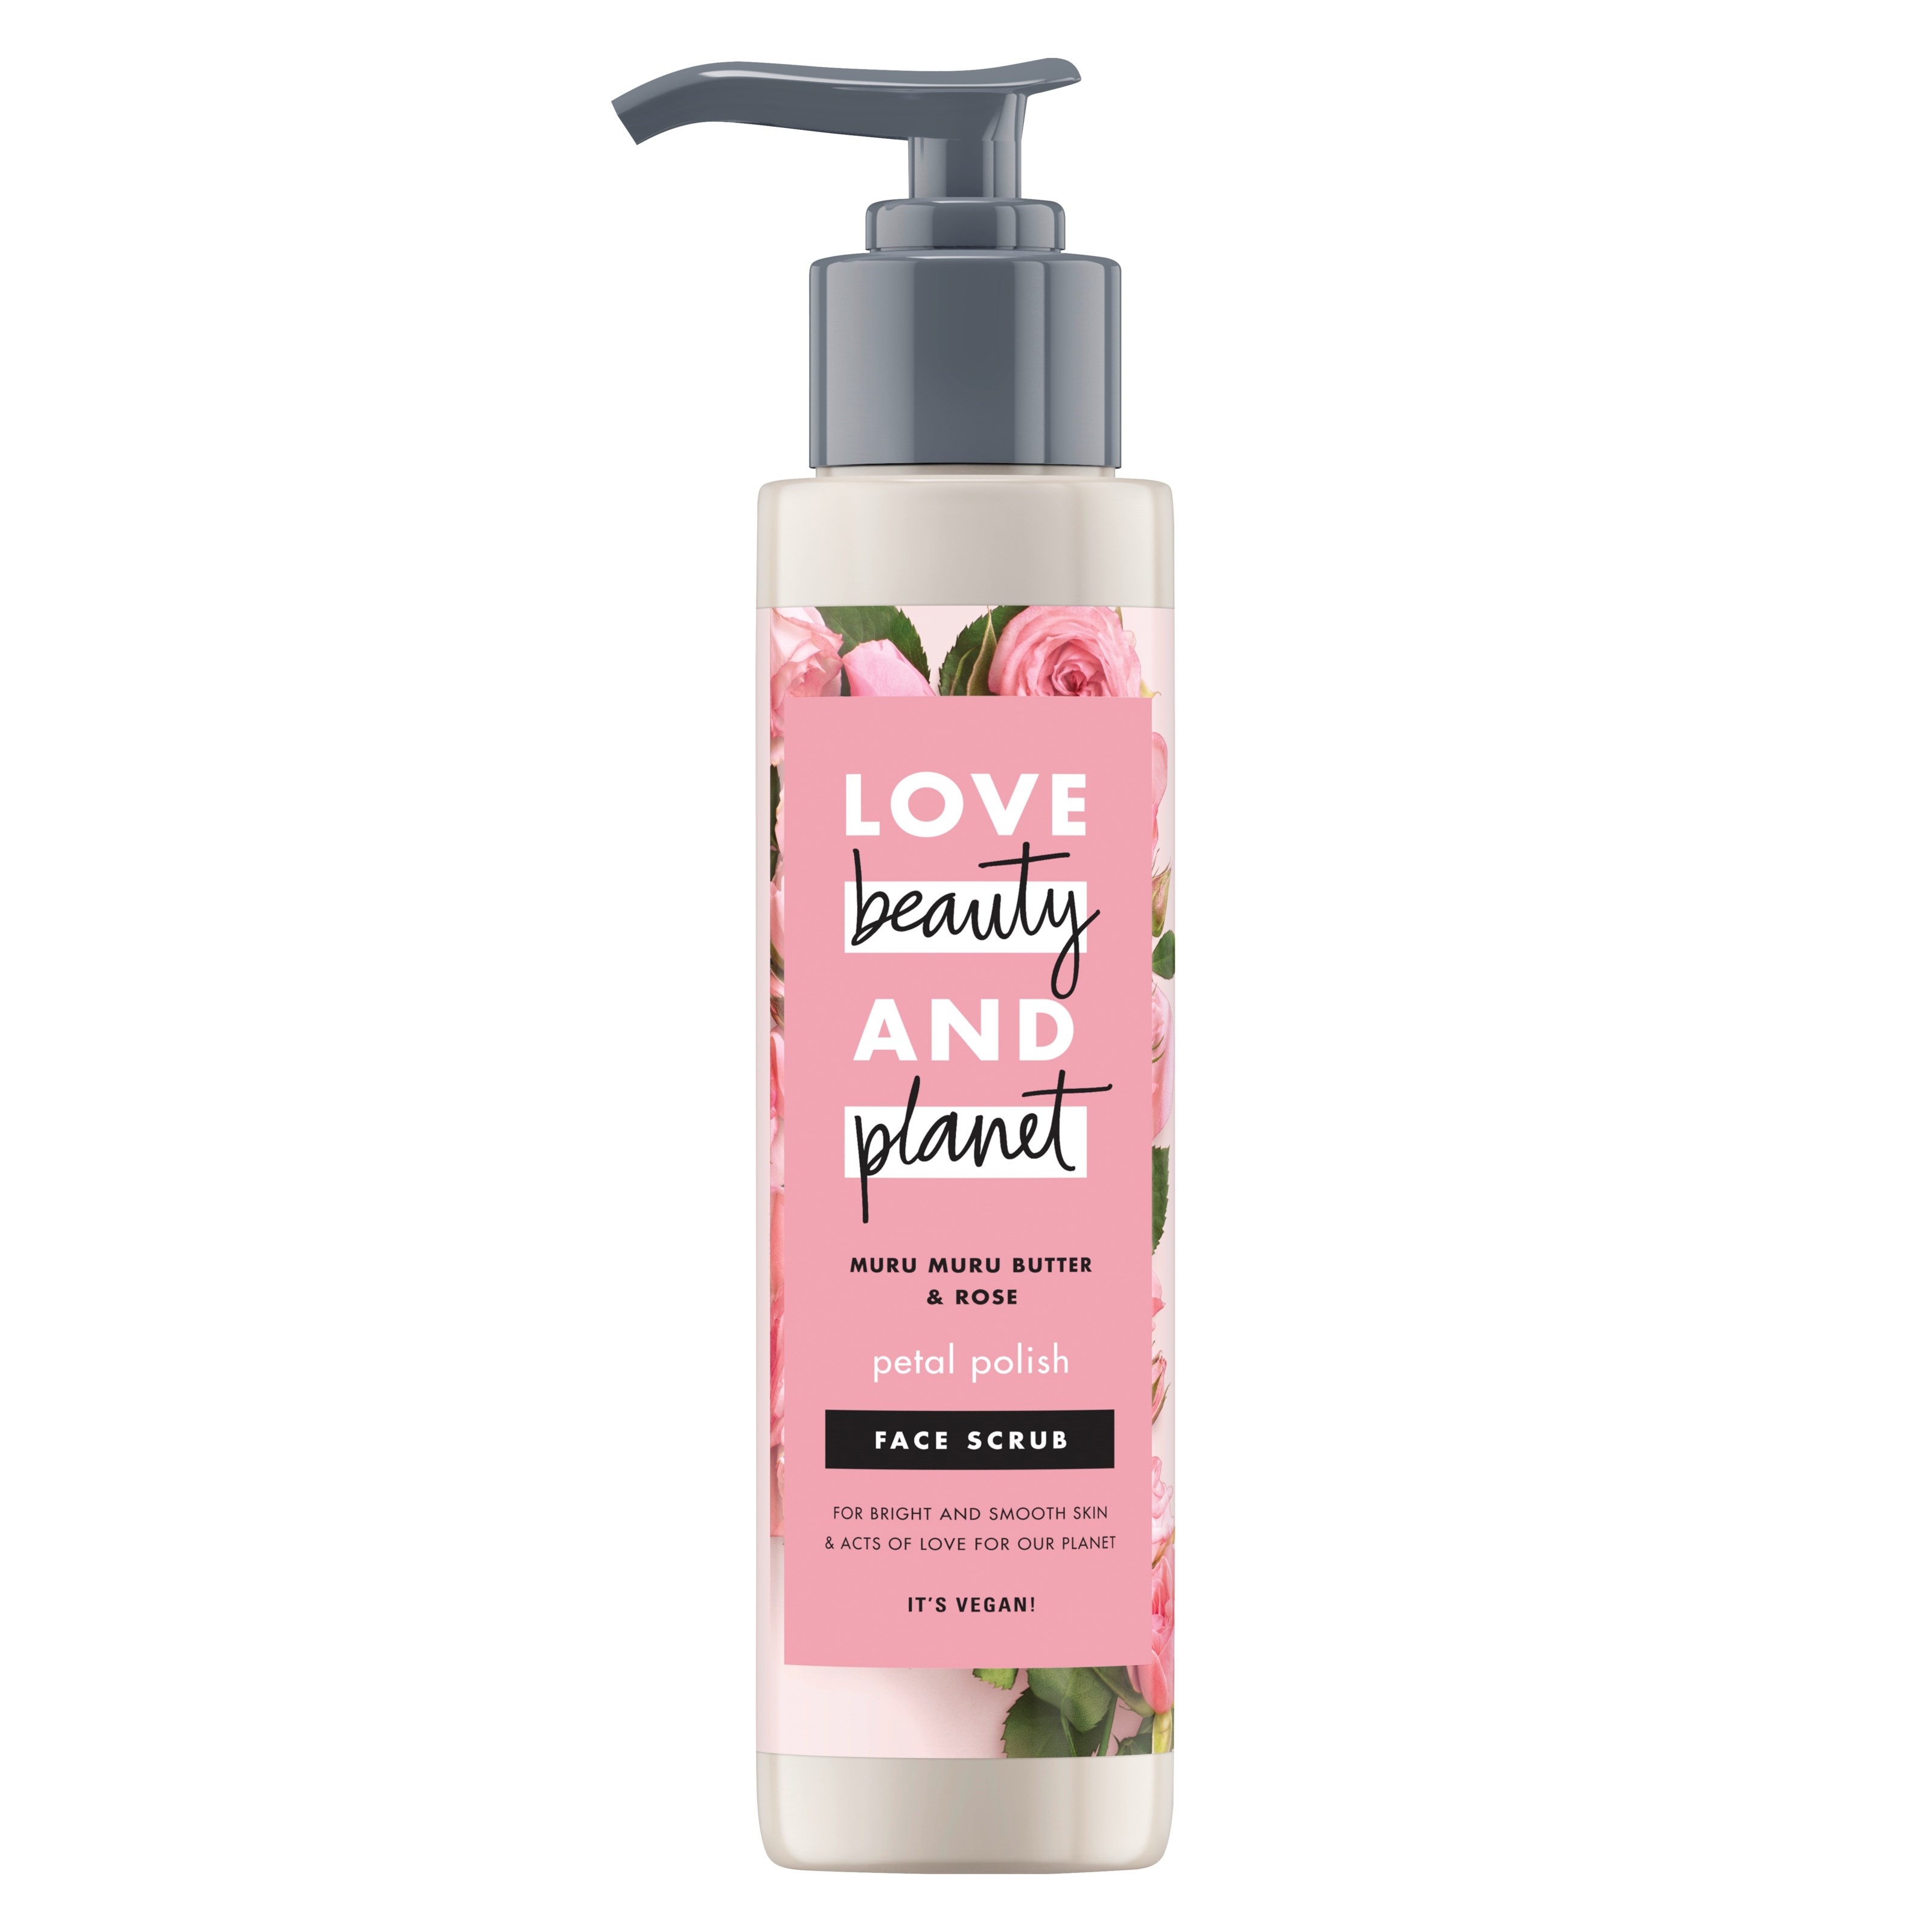 Love Beauty & Planet Muru Muru Butter & Rose Petal Polish Face Scrub